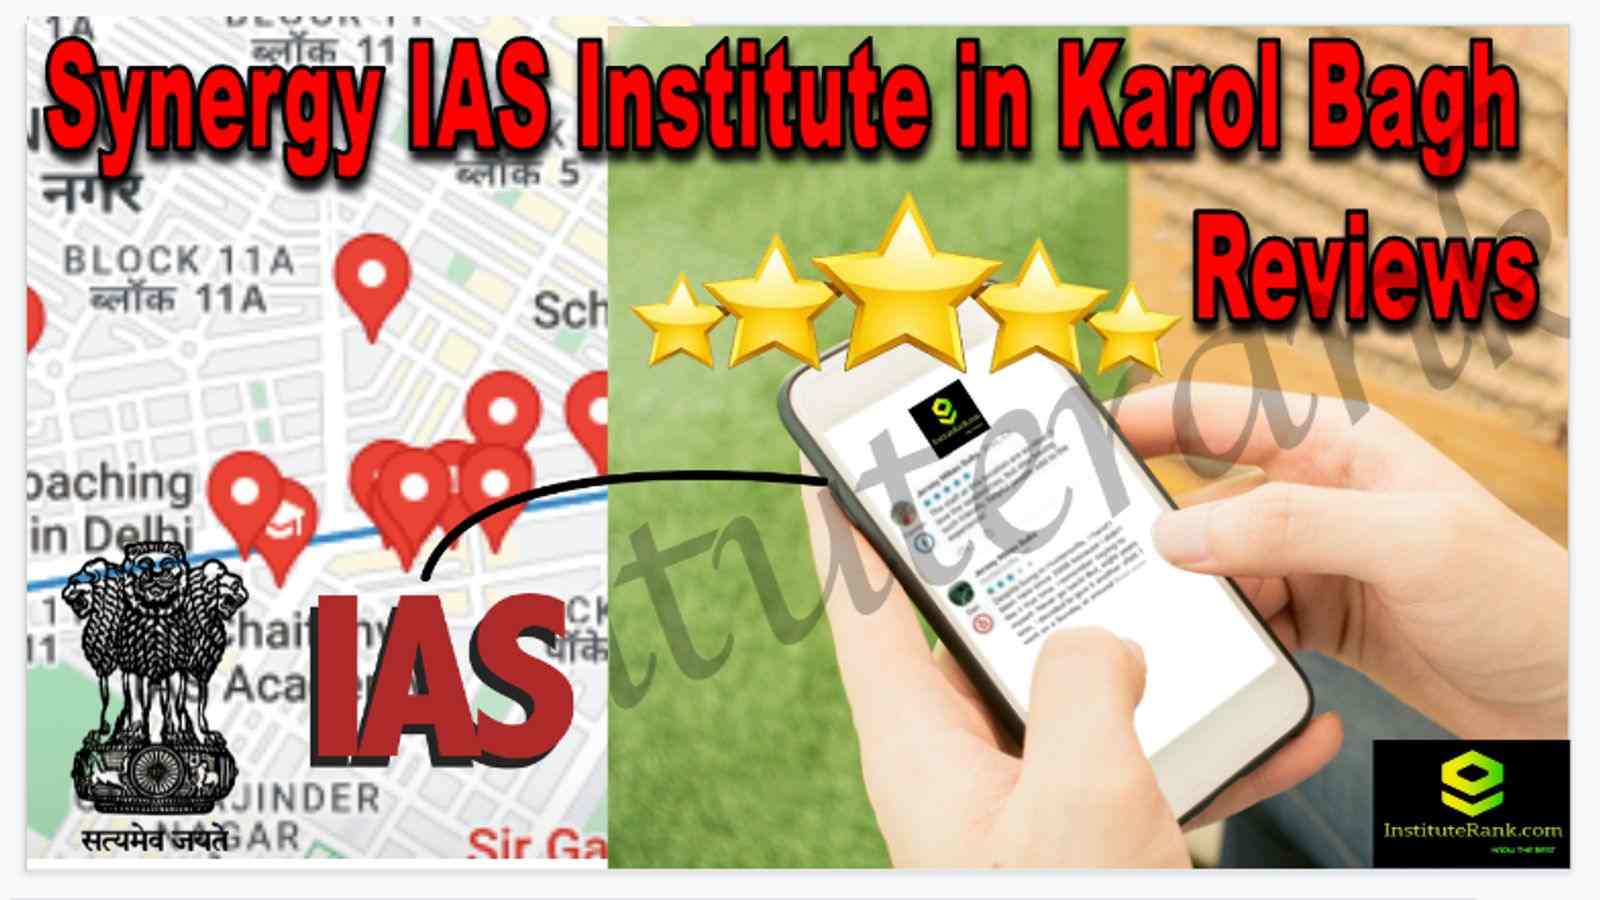 Synergy IAS Institute in Karol Bagh